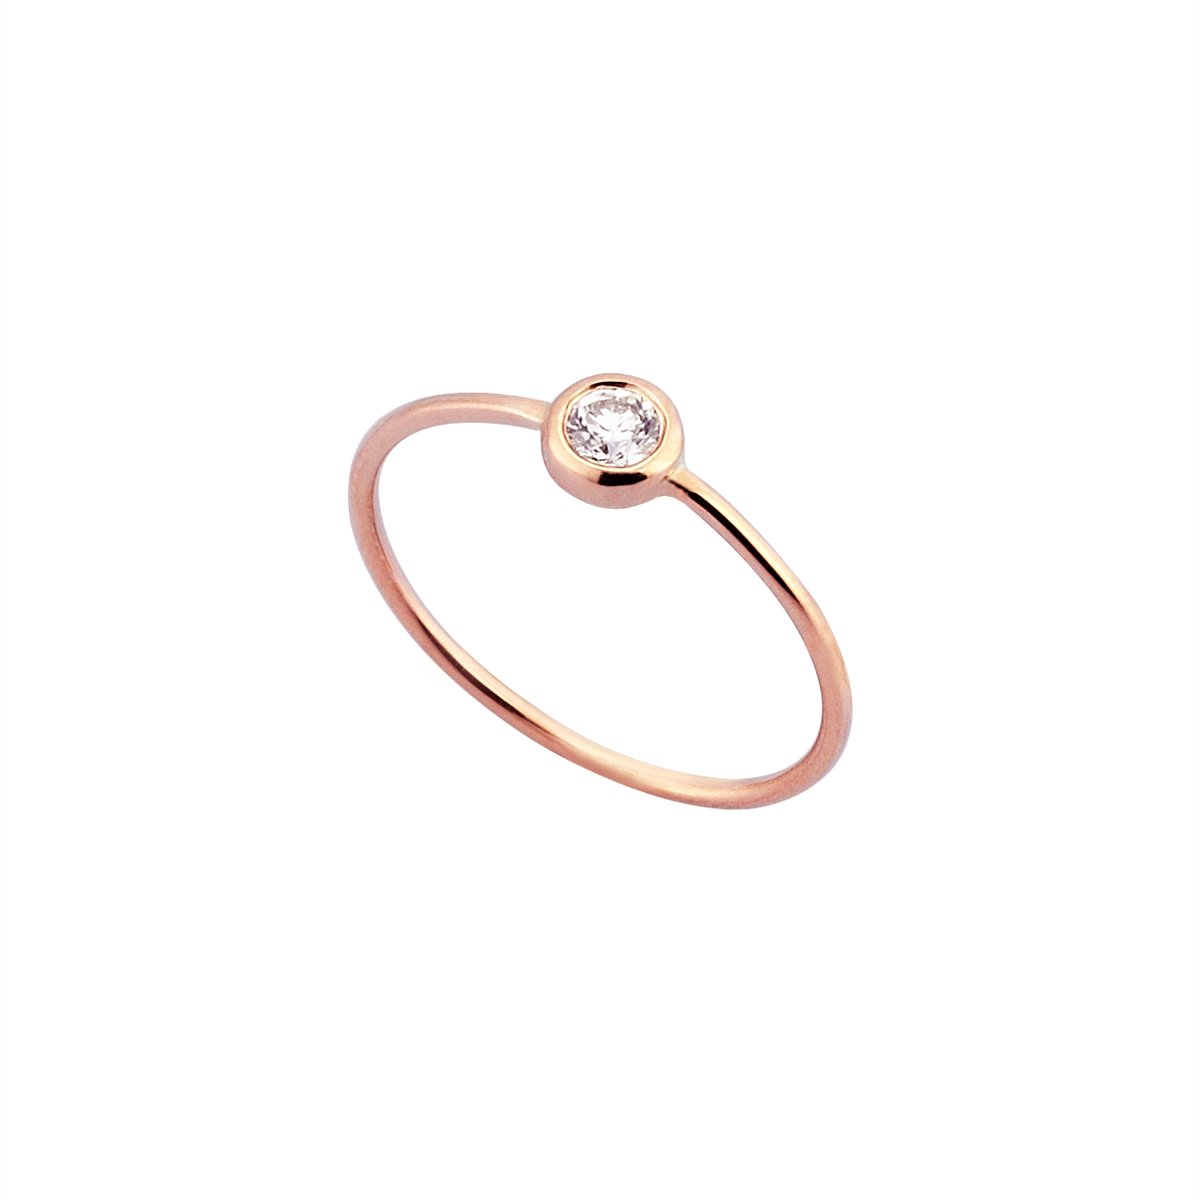 Circular Diamond Midi Ring in Rose Gold - Her Story Shop